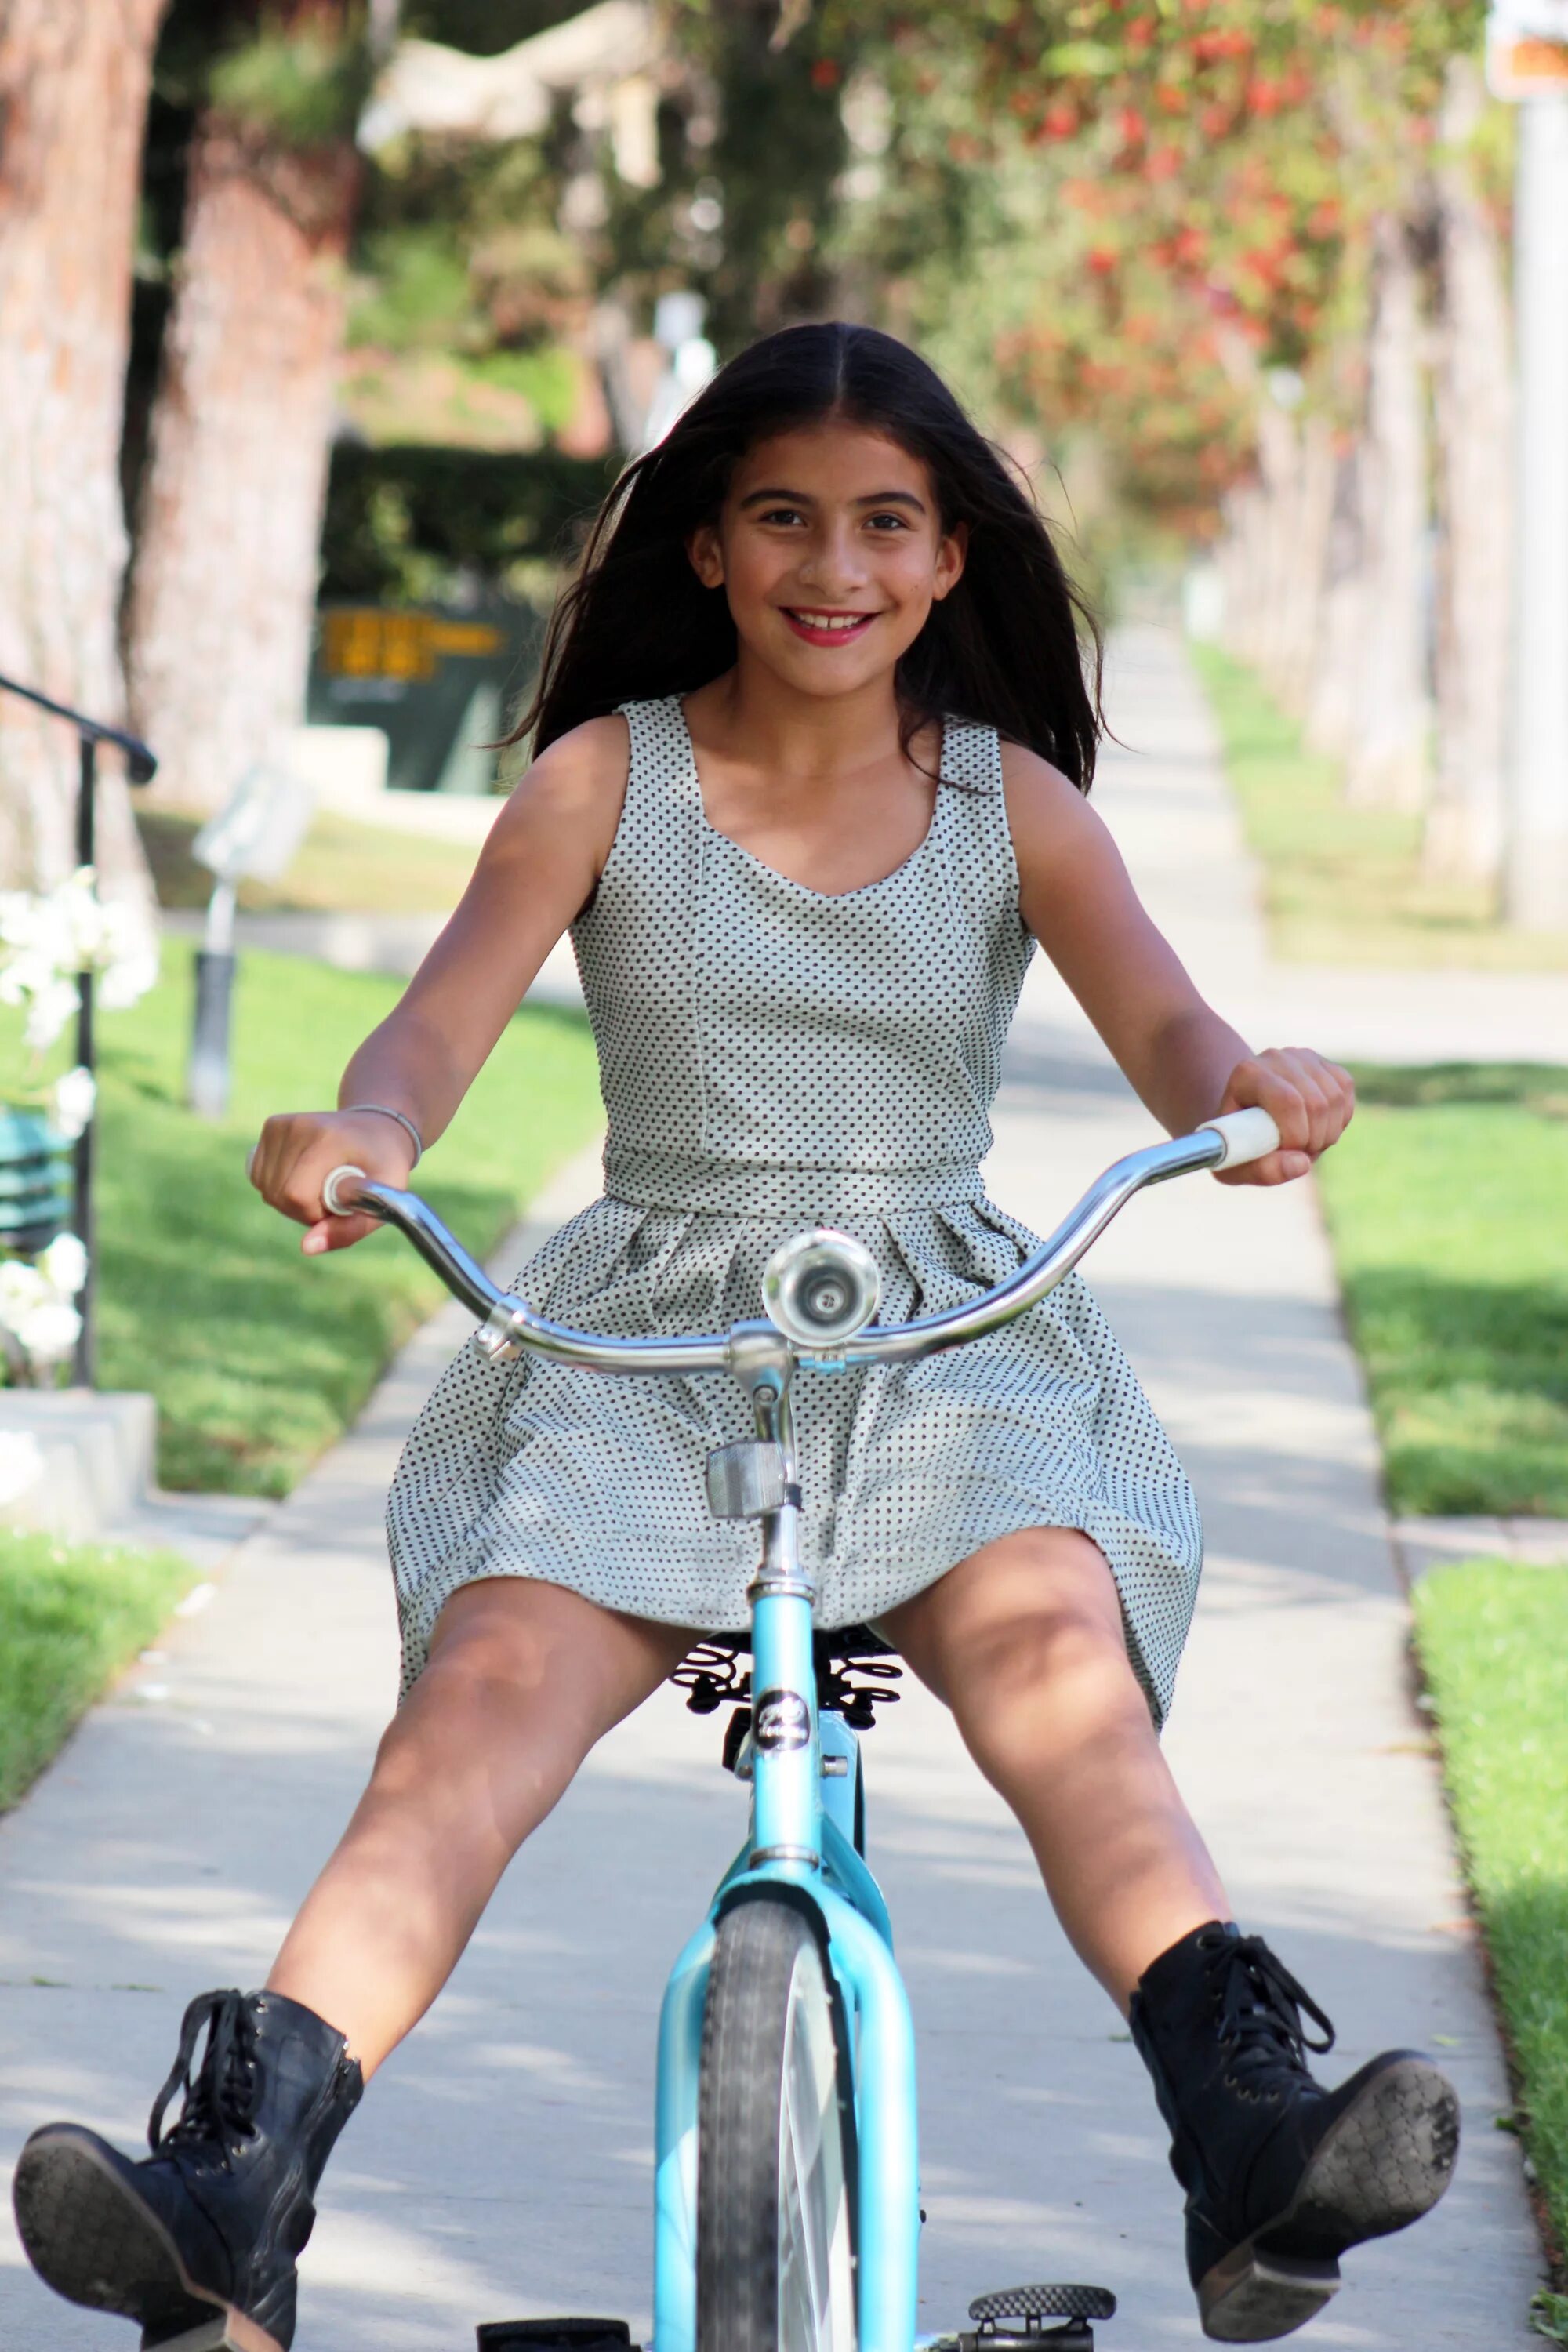 Little young girls private. Девушка подросток на велосипеде. Велосипед для девочки. Девушка на детском велосипеде. Little Bike девушка.